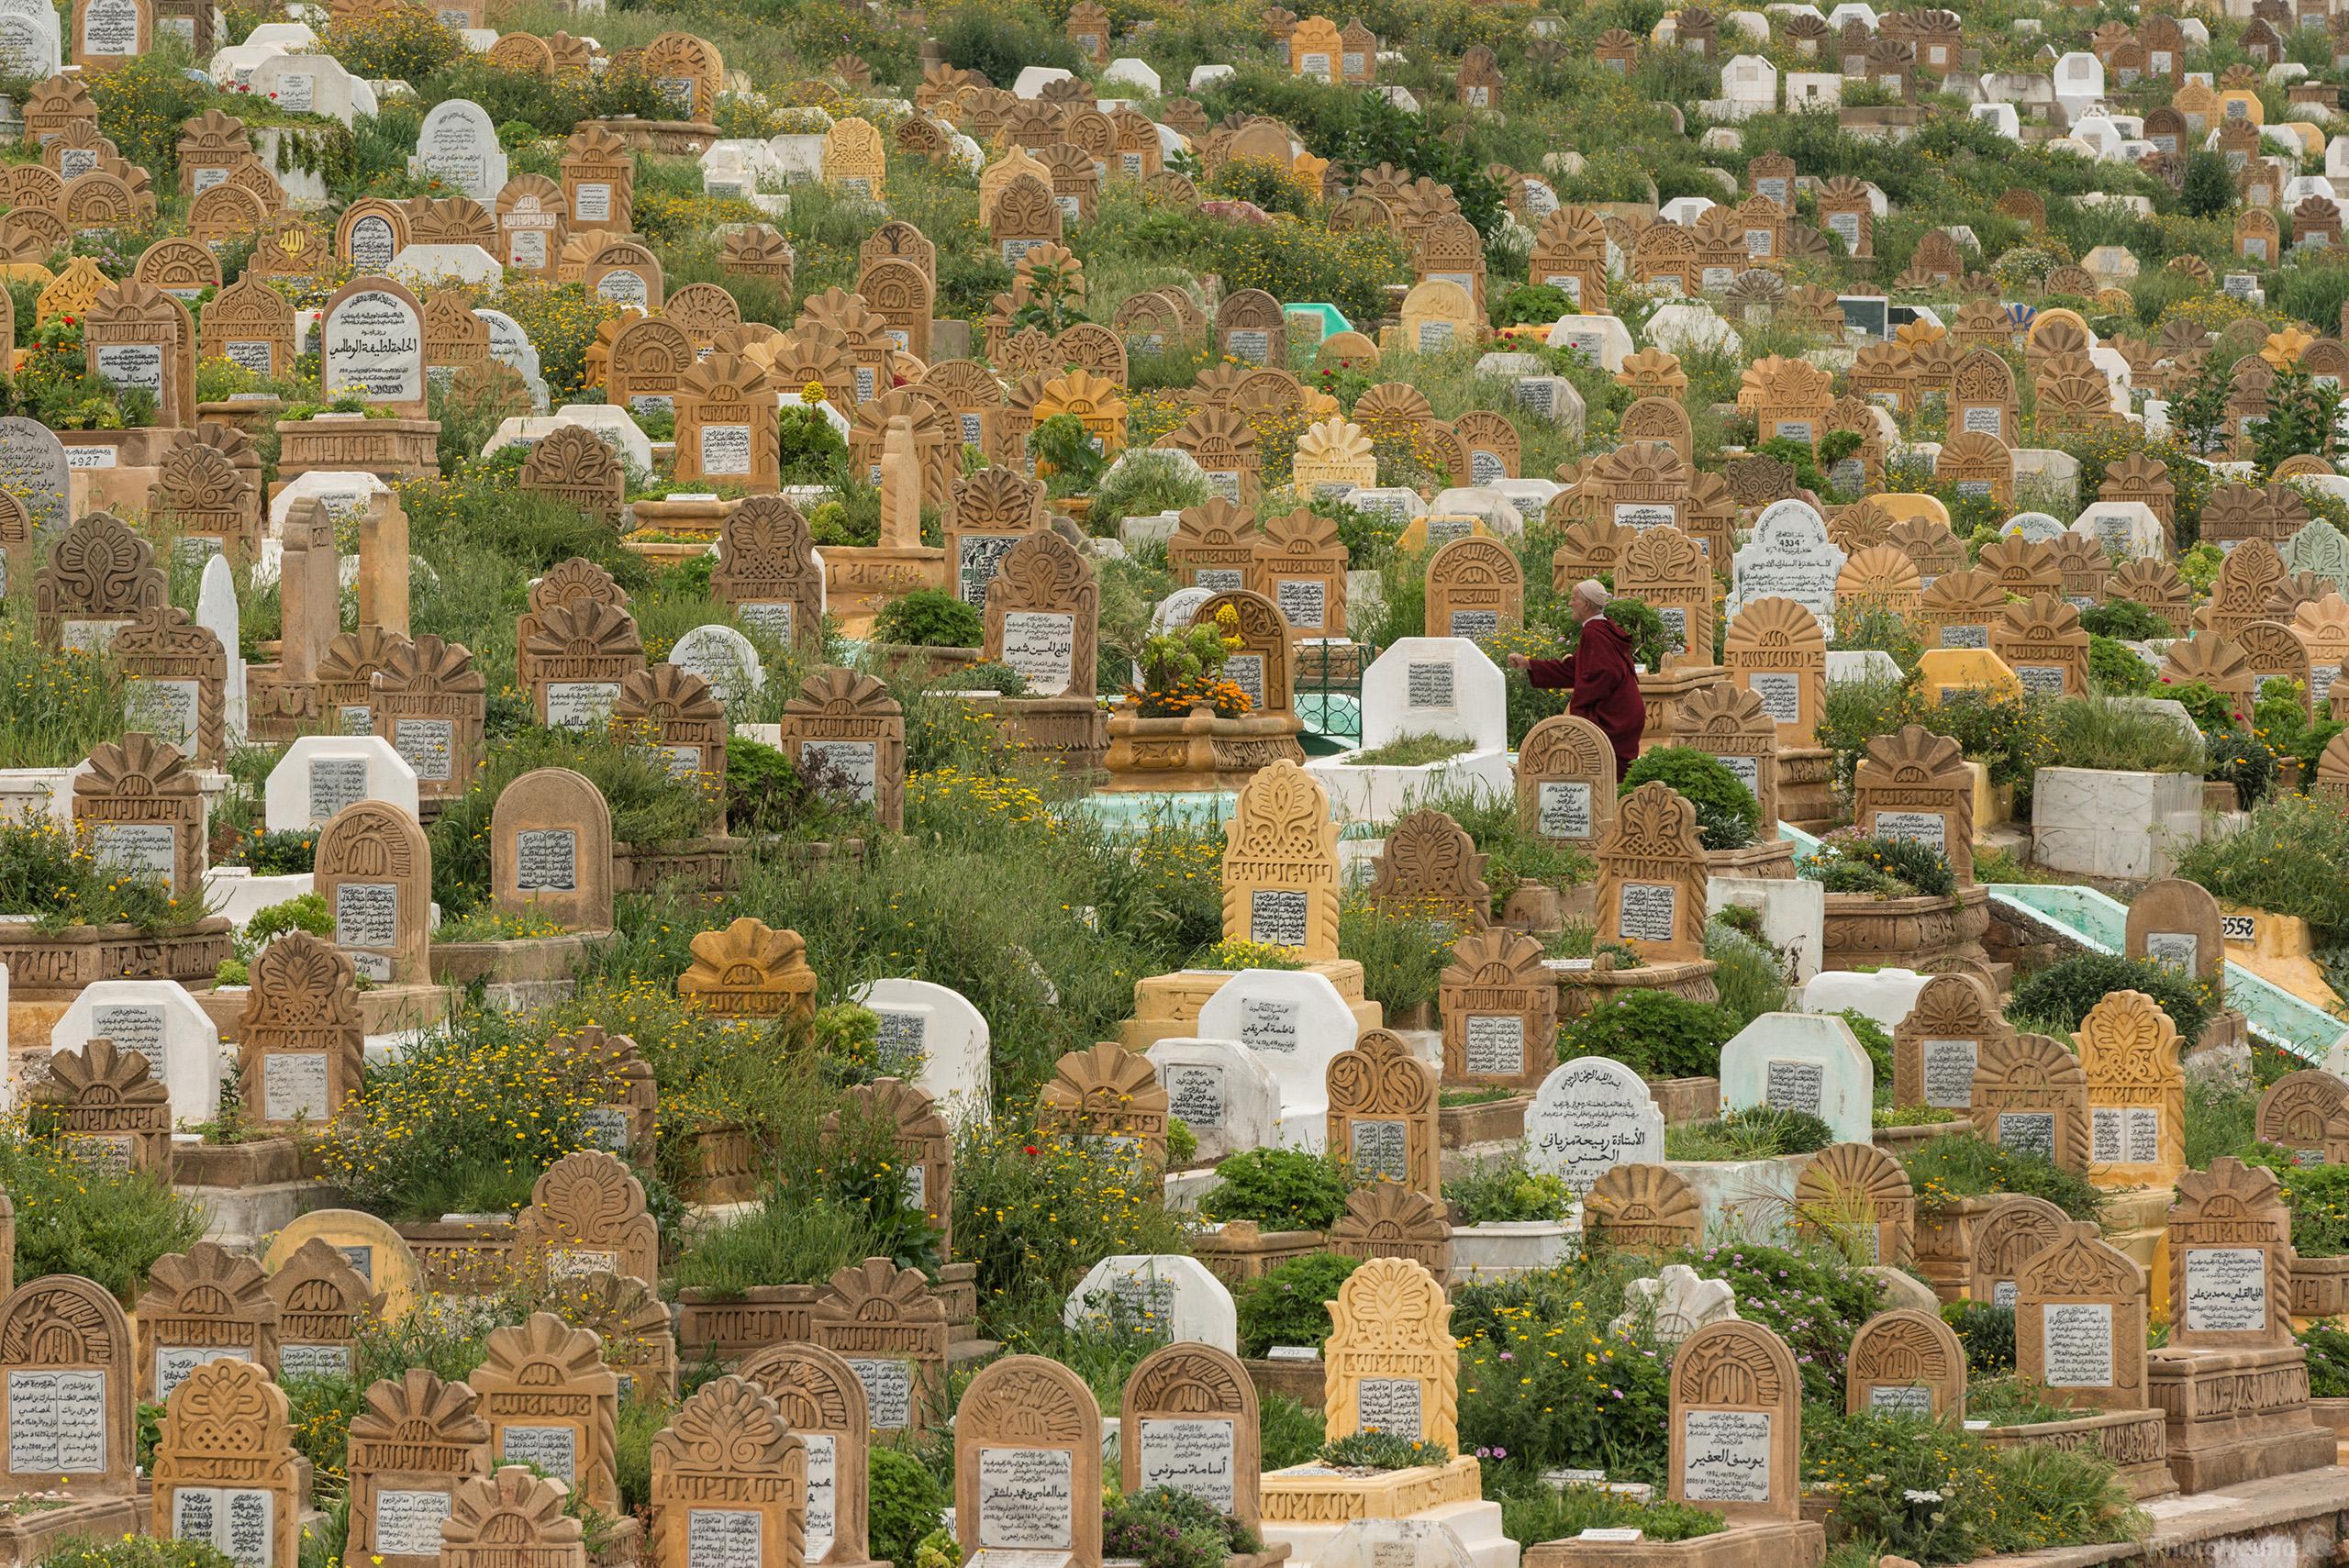 Image of Rabat Cemetery by Luka Esenko